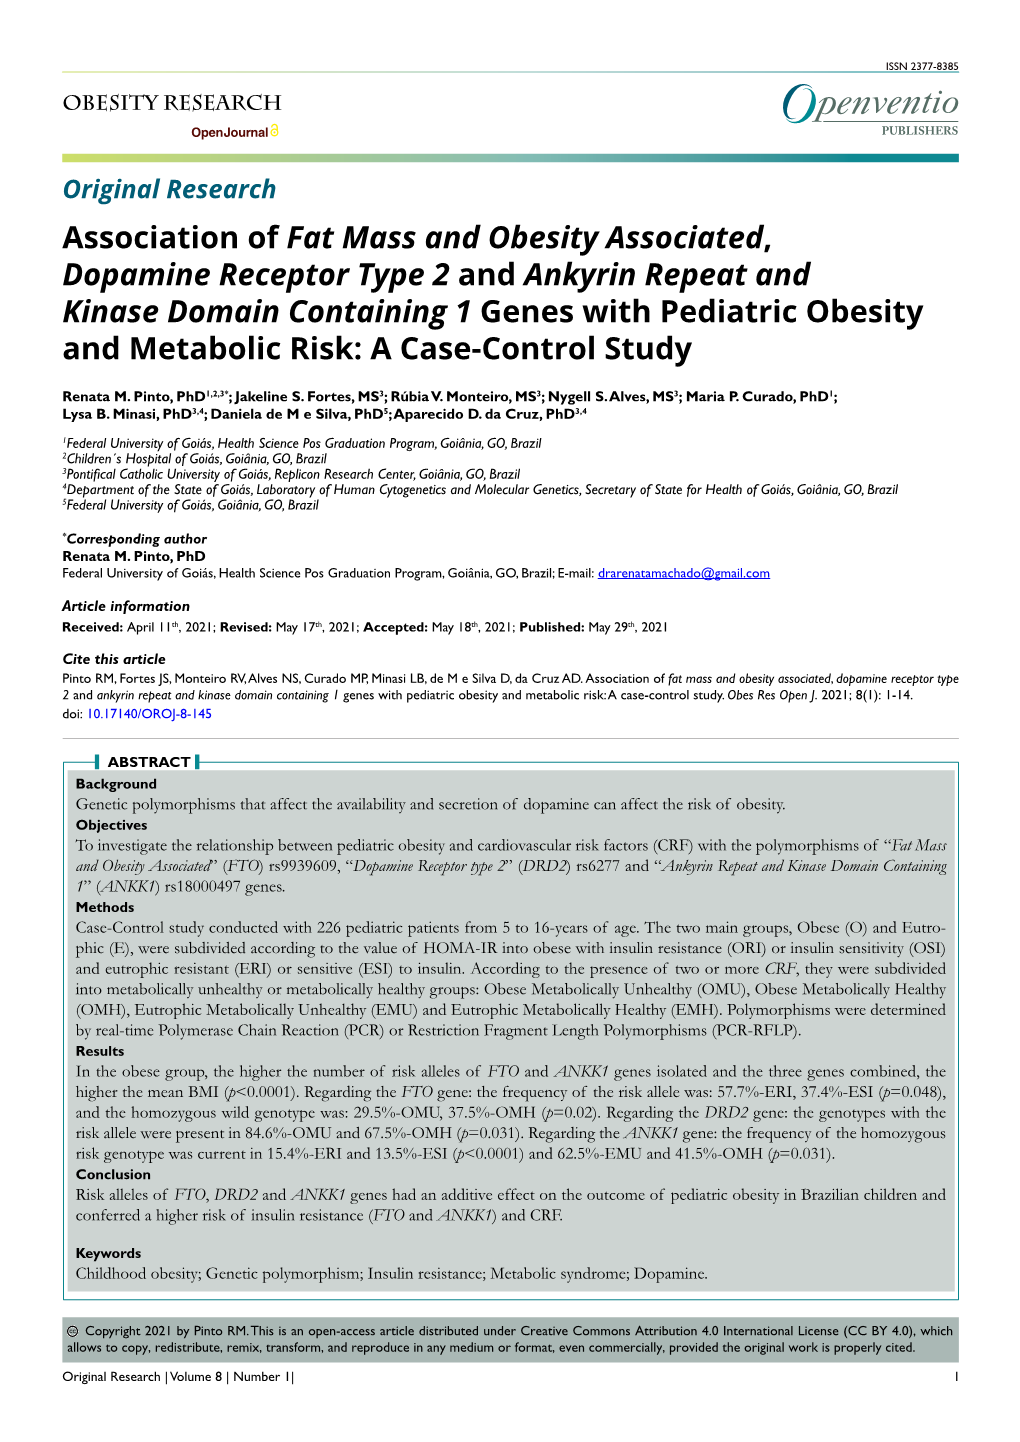 Association of Fat Mass and Obesity Associated, Dopamine Receptor